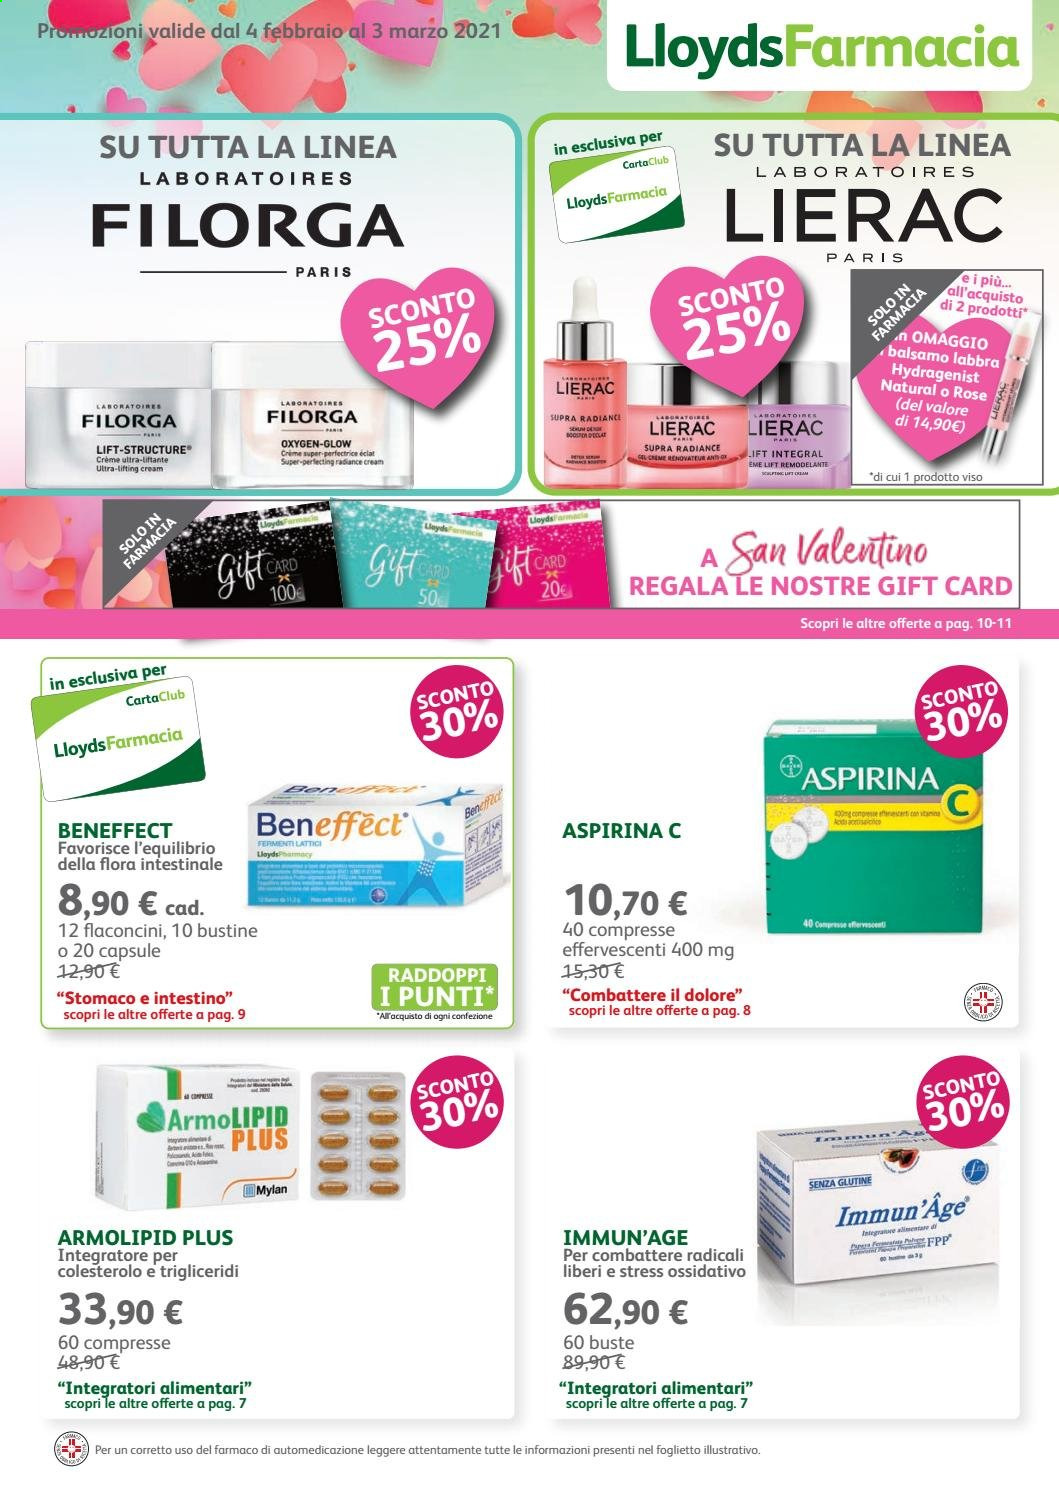 thumbnail - Volantino Lloyds Farmacia - 4/2/2021 - 3/3/2021 - Prodotti in offerta - Filorga, Lierac, balsamo labbra, Beneffect, flora intestinale, Aspirina. Pagina 1.